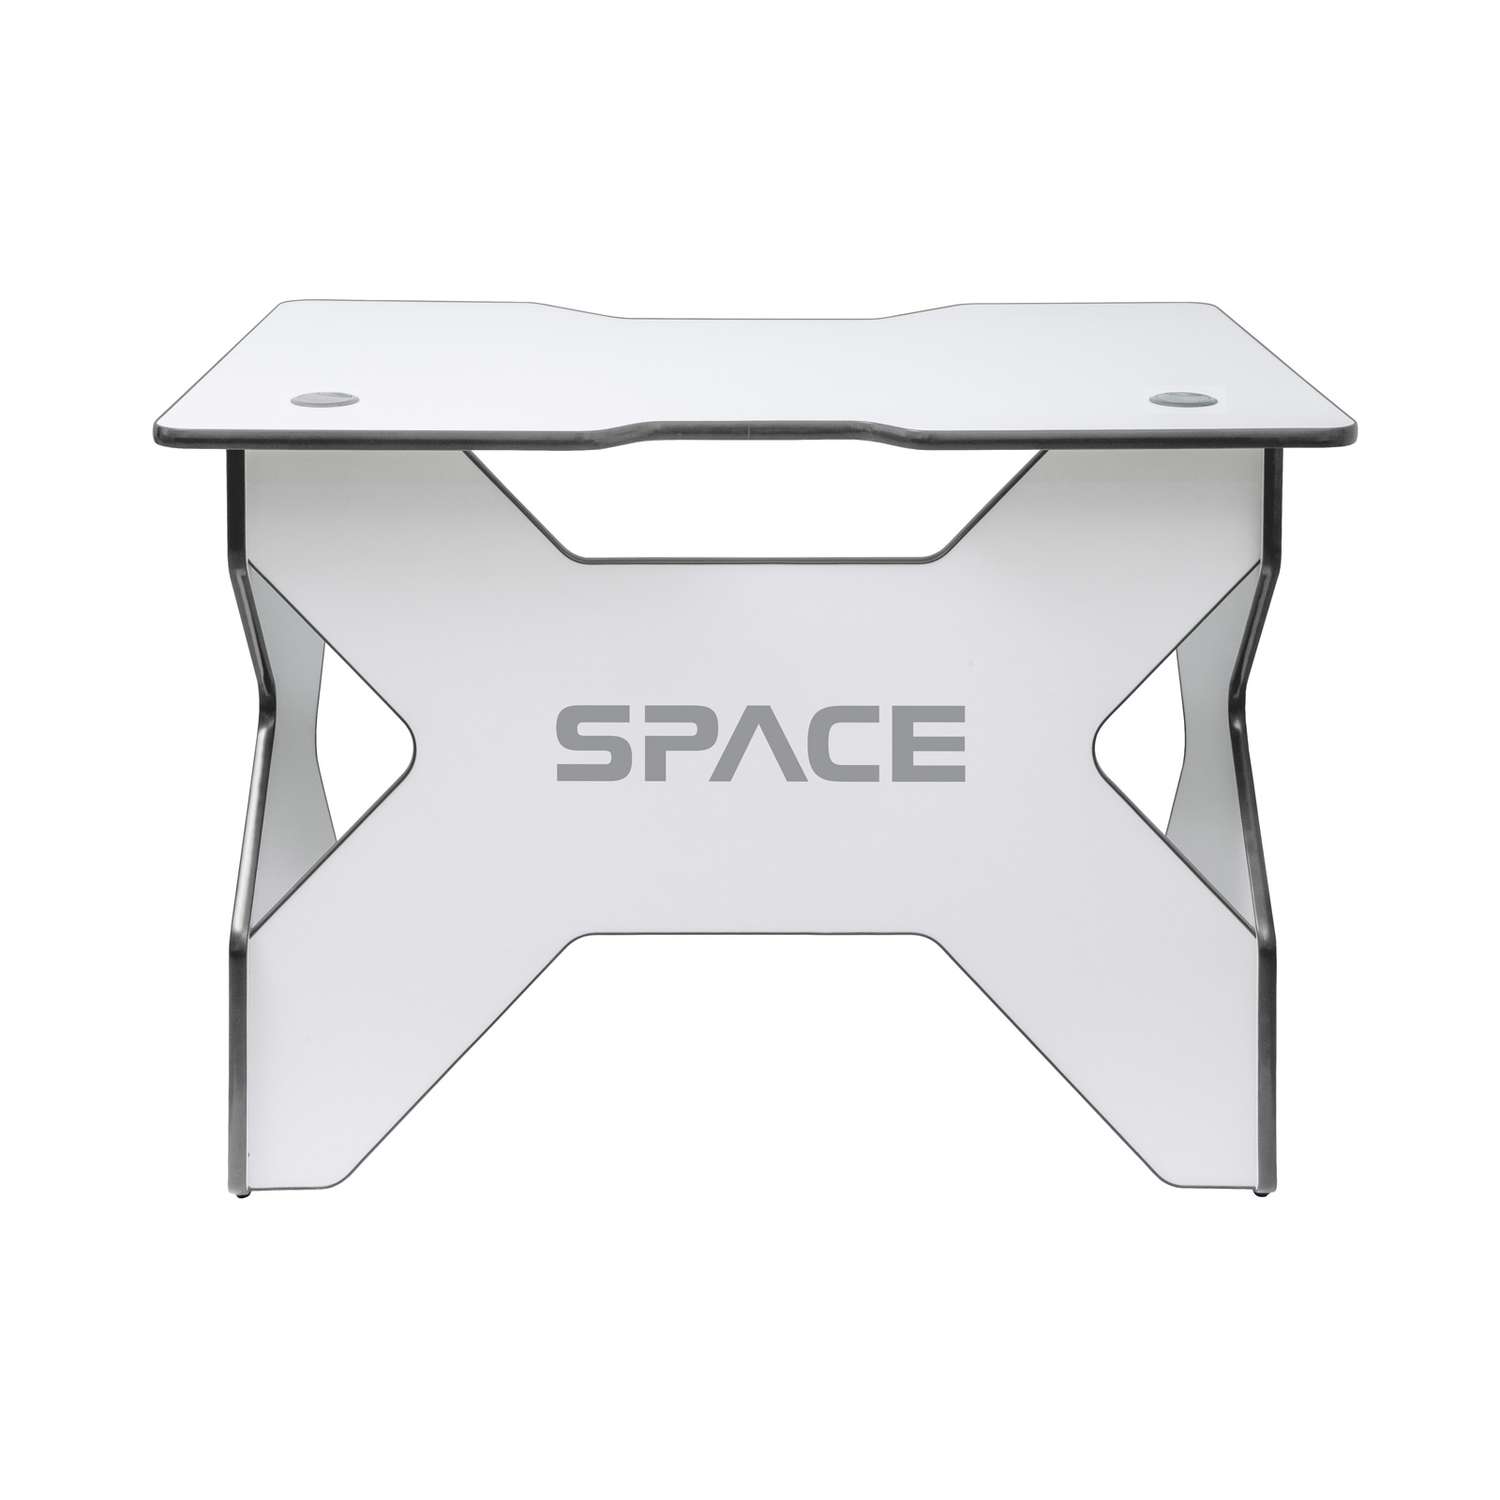 Vmmgame space. Игровой компьютерный стол vmmgame Space 140. Игровой компьютерный стол Space Dark/Space Light (столешница 140см). Игровой компьютерный стол vmmgame Space Lunar. Vmmgame Space 140 Light Blue Размеры.